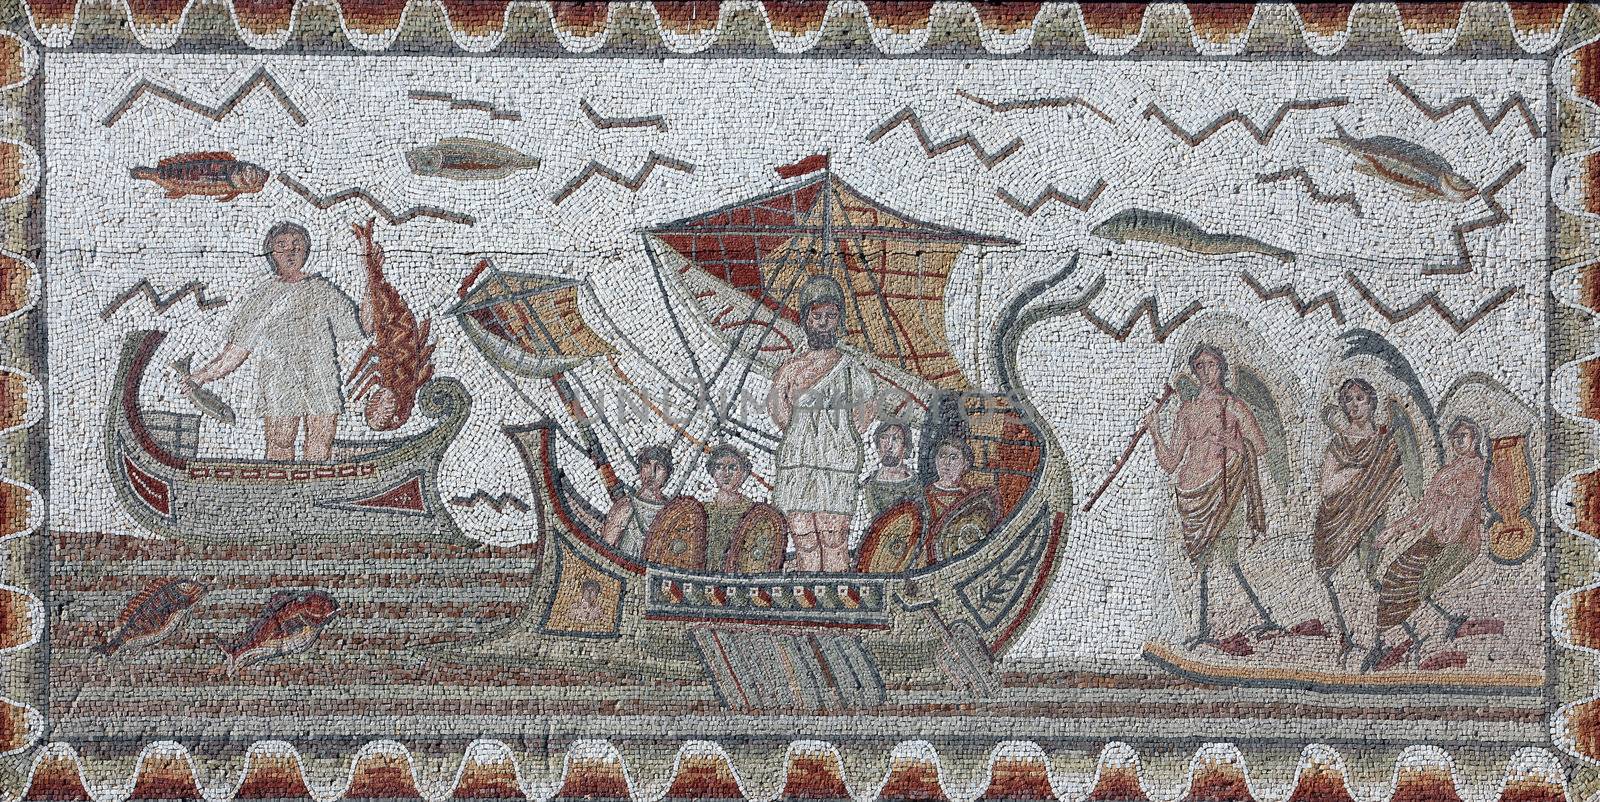 Ancient Roman mosaic by atlas